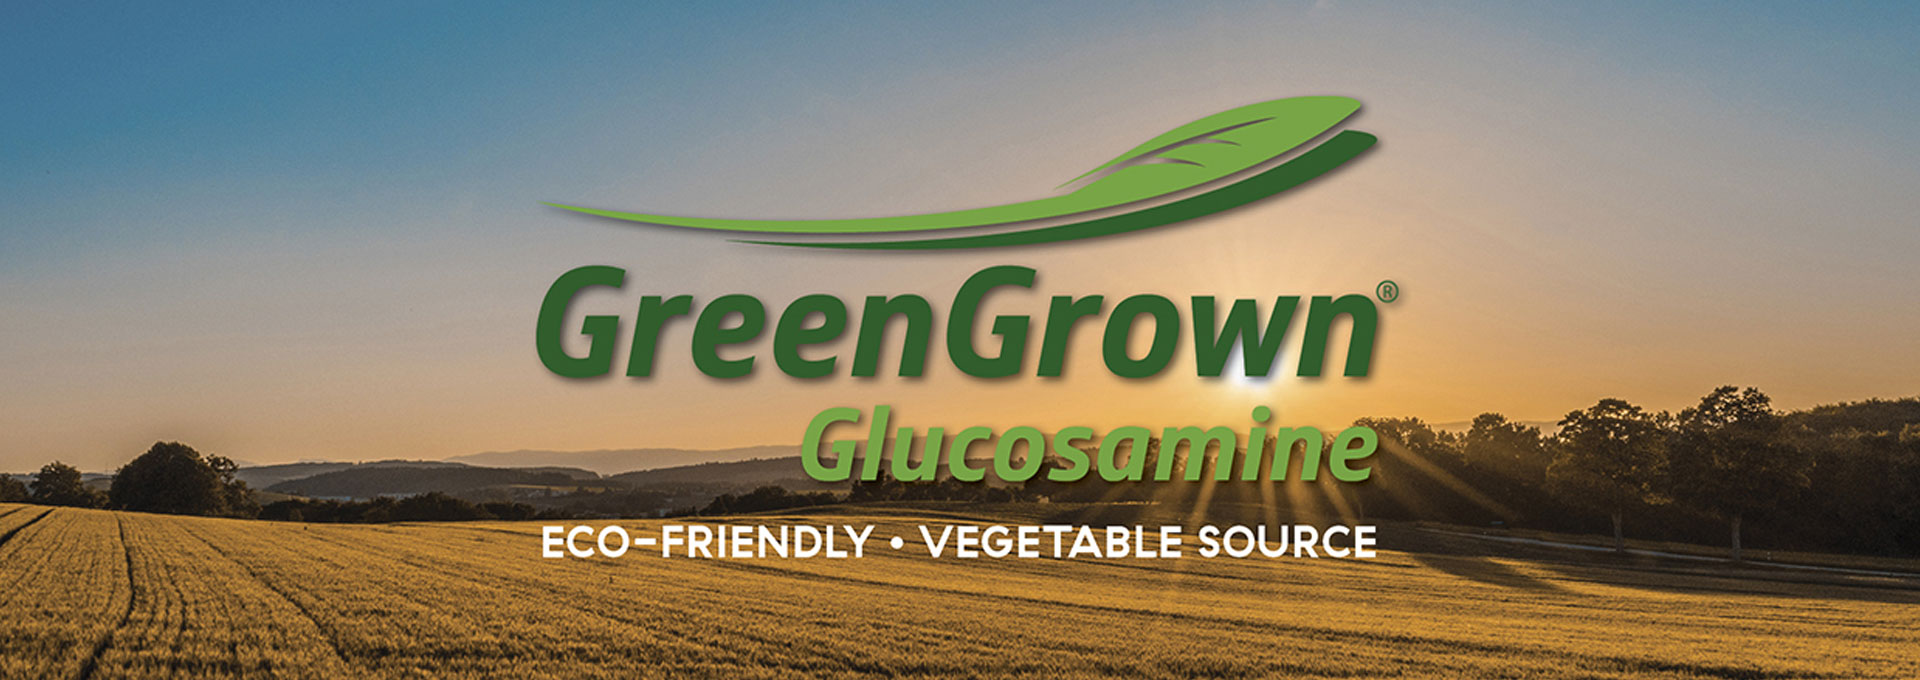 GreenGrown Glucosamine Banner